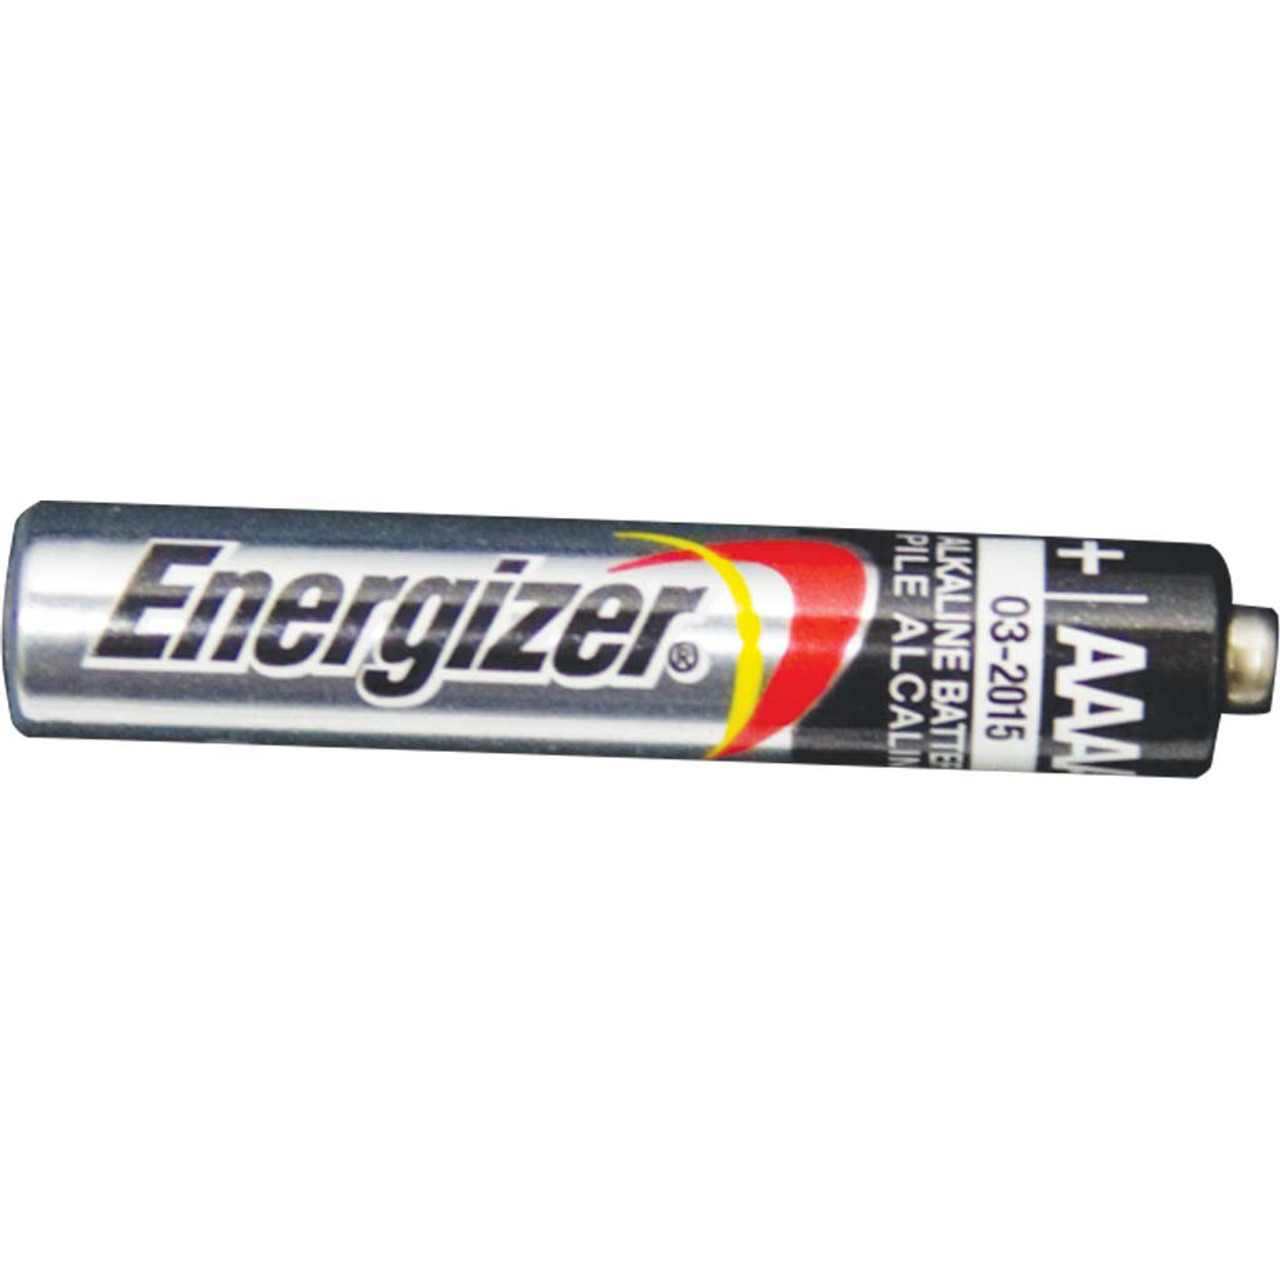 Energizer AAAA blister x 2 - Comprar en Planeta Pila